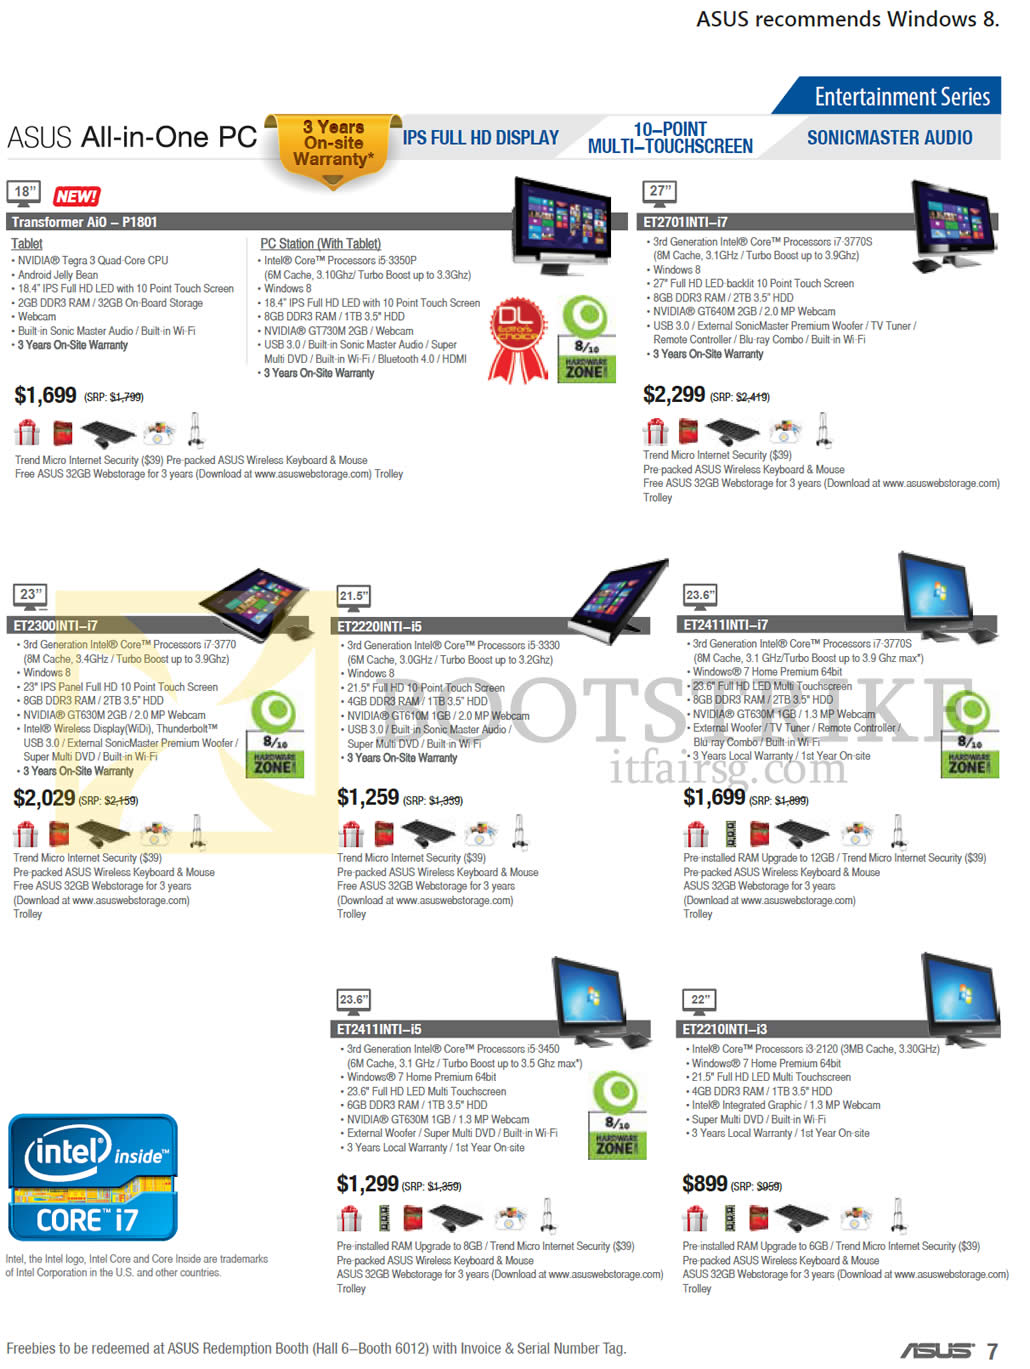 PC SHOW 2013 price list image brochure of ASUS Desktop PCs AIO Transformer AIO-P1801, ET2701INTI, ET2300INTI, ET2220INTI, ET2411INTI, ET2411INTI, ET2210INTI